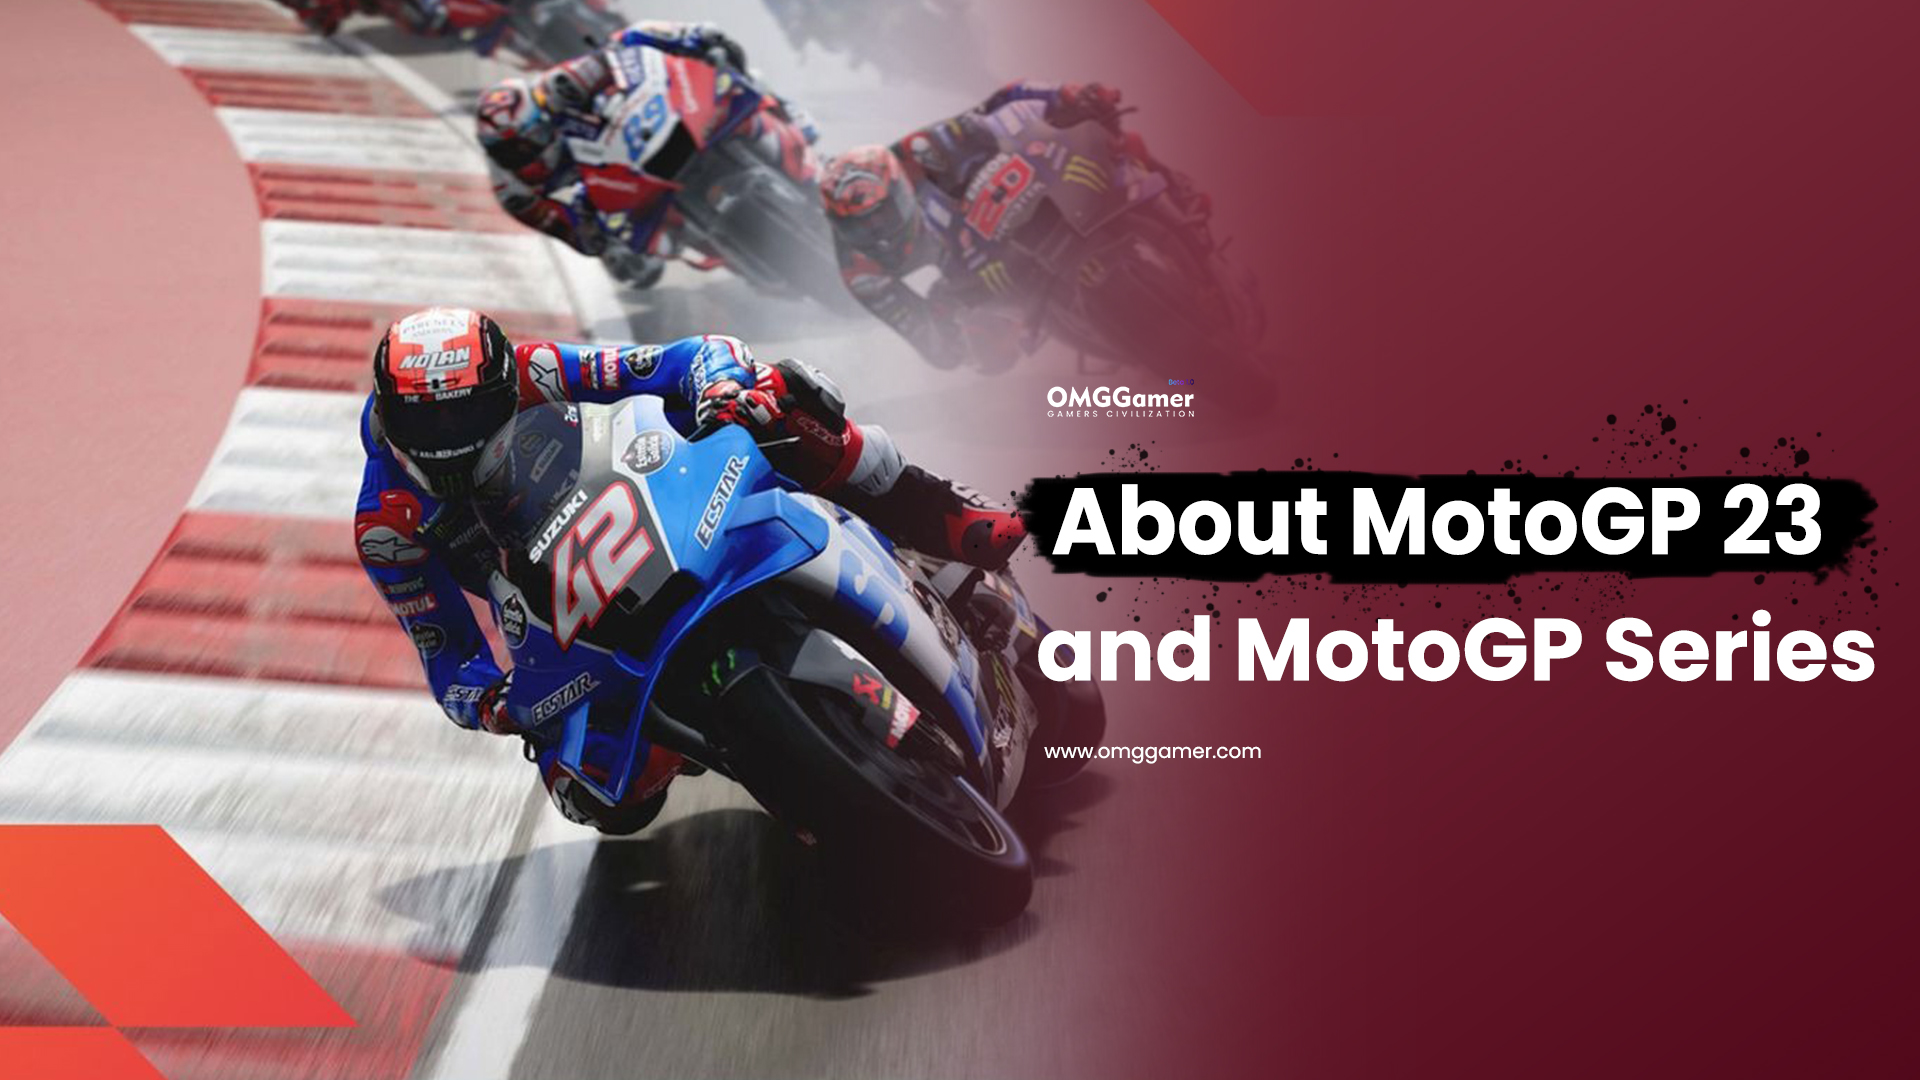 About MotoGP 23 and MotoGP Series